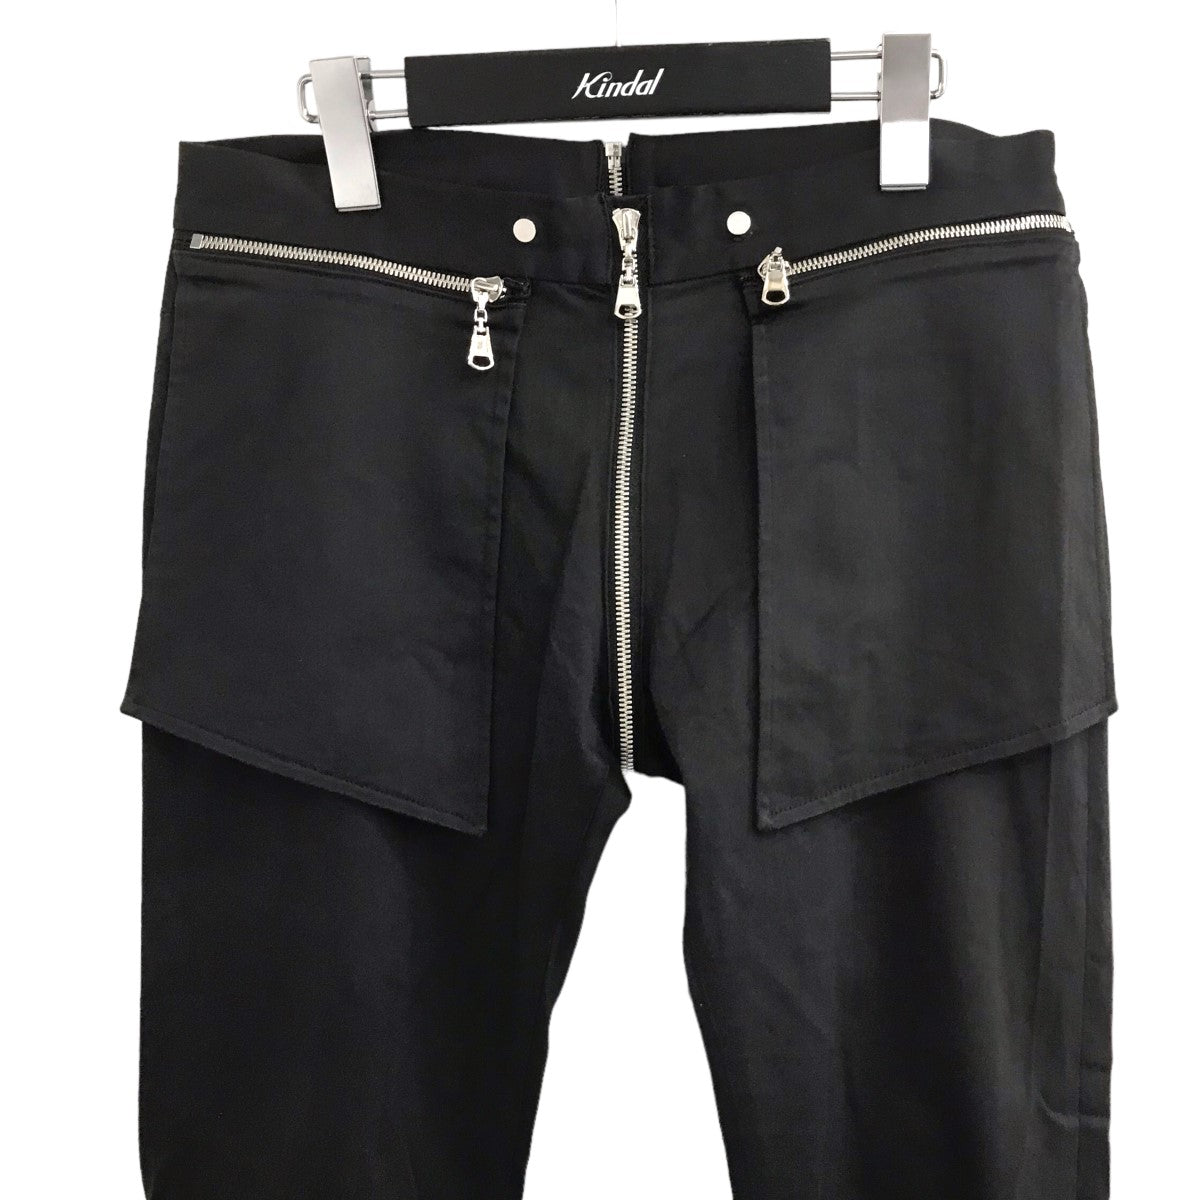 ACUOD by CHANU(アクオドバイチャヌ) ジップスキニーパンツ ブラック サイズ:M メンズ パンツ 中古・古着